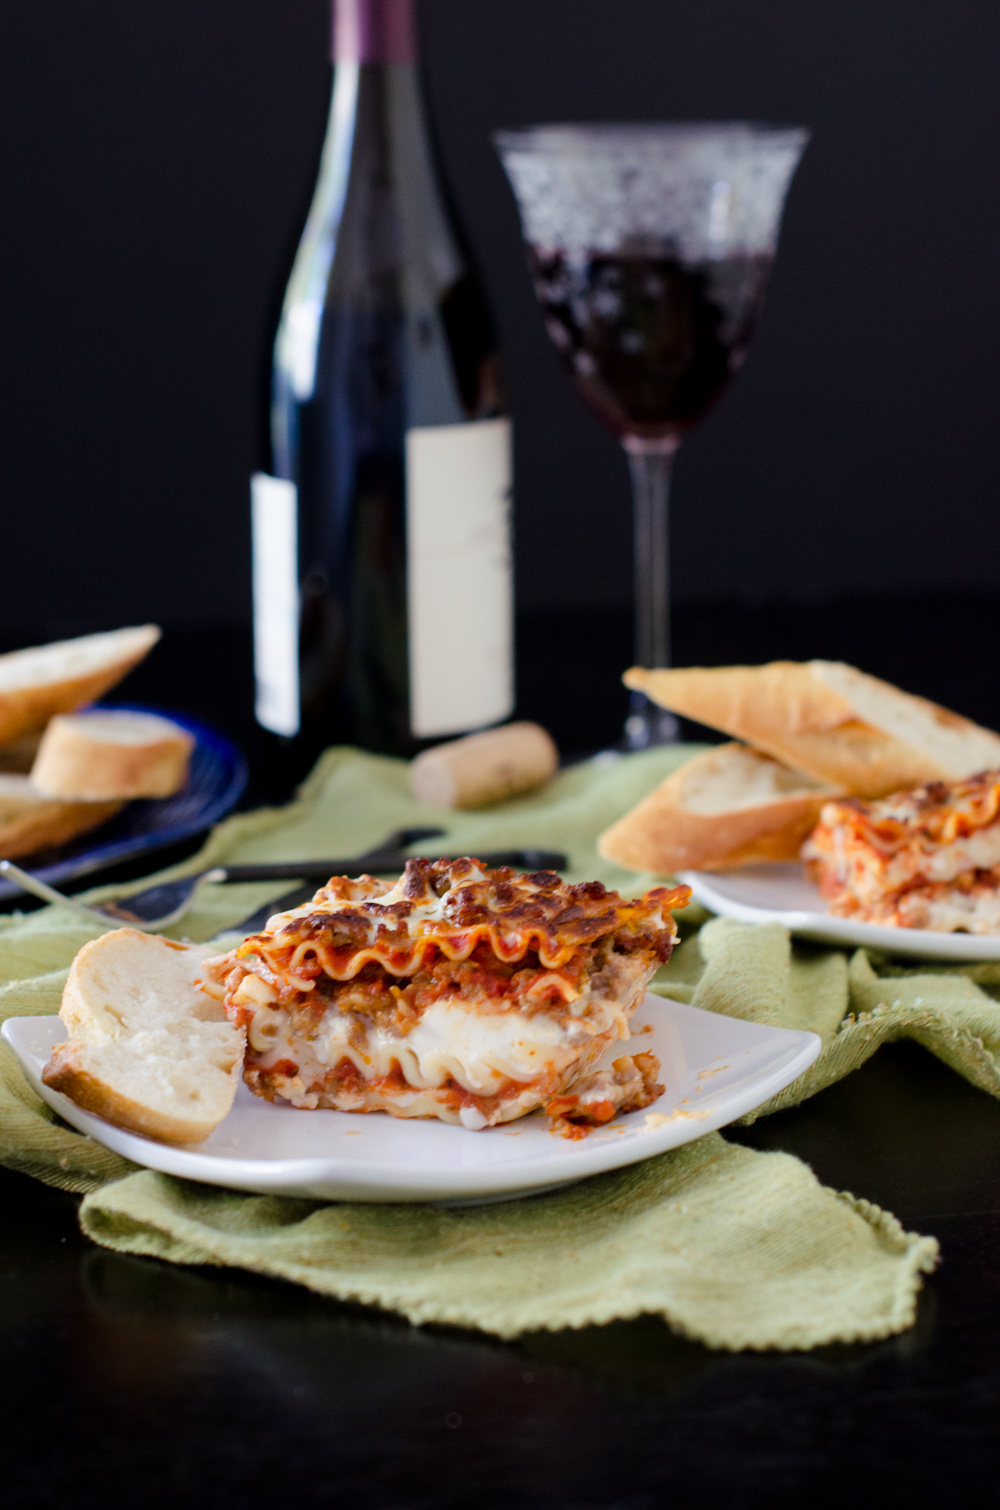 Cheese Attack Lasagna recipe from ChefSarahElizabeth.com